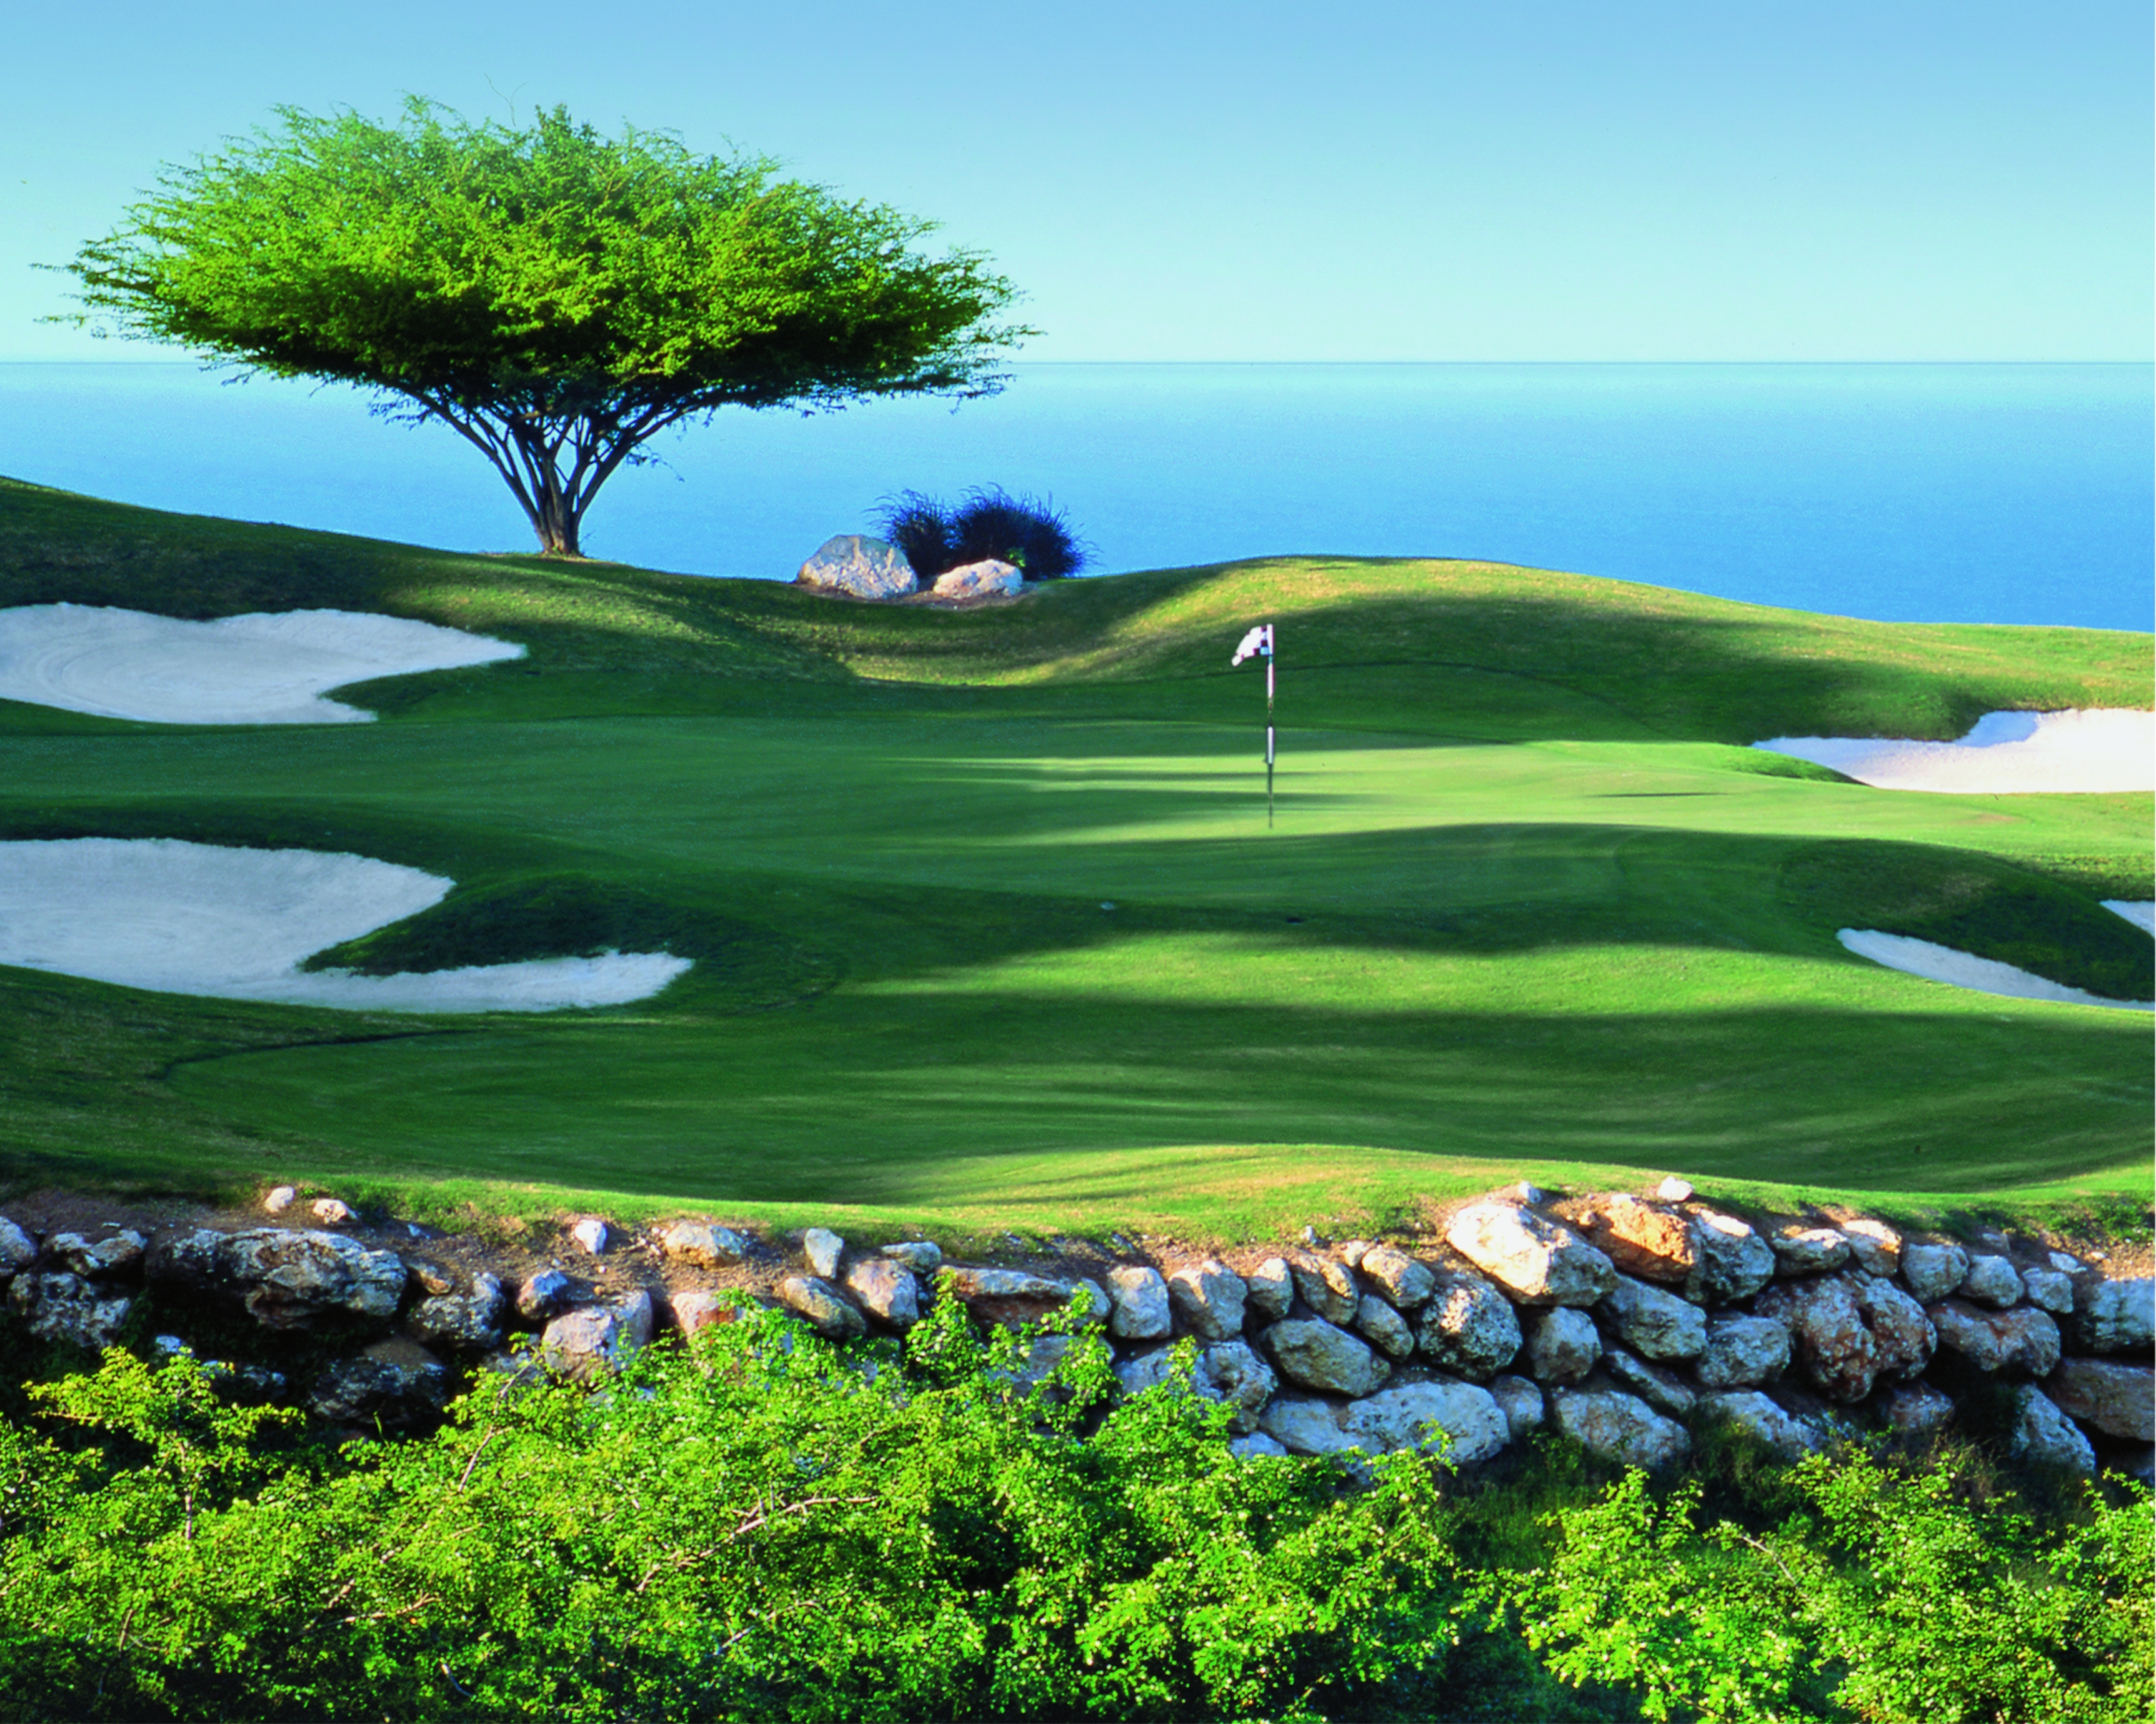 10 Most Popular Most Beautiful Golf Courses Wallpaper FULL ...